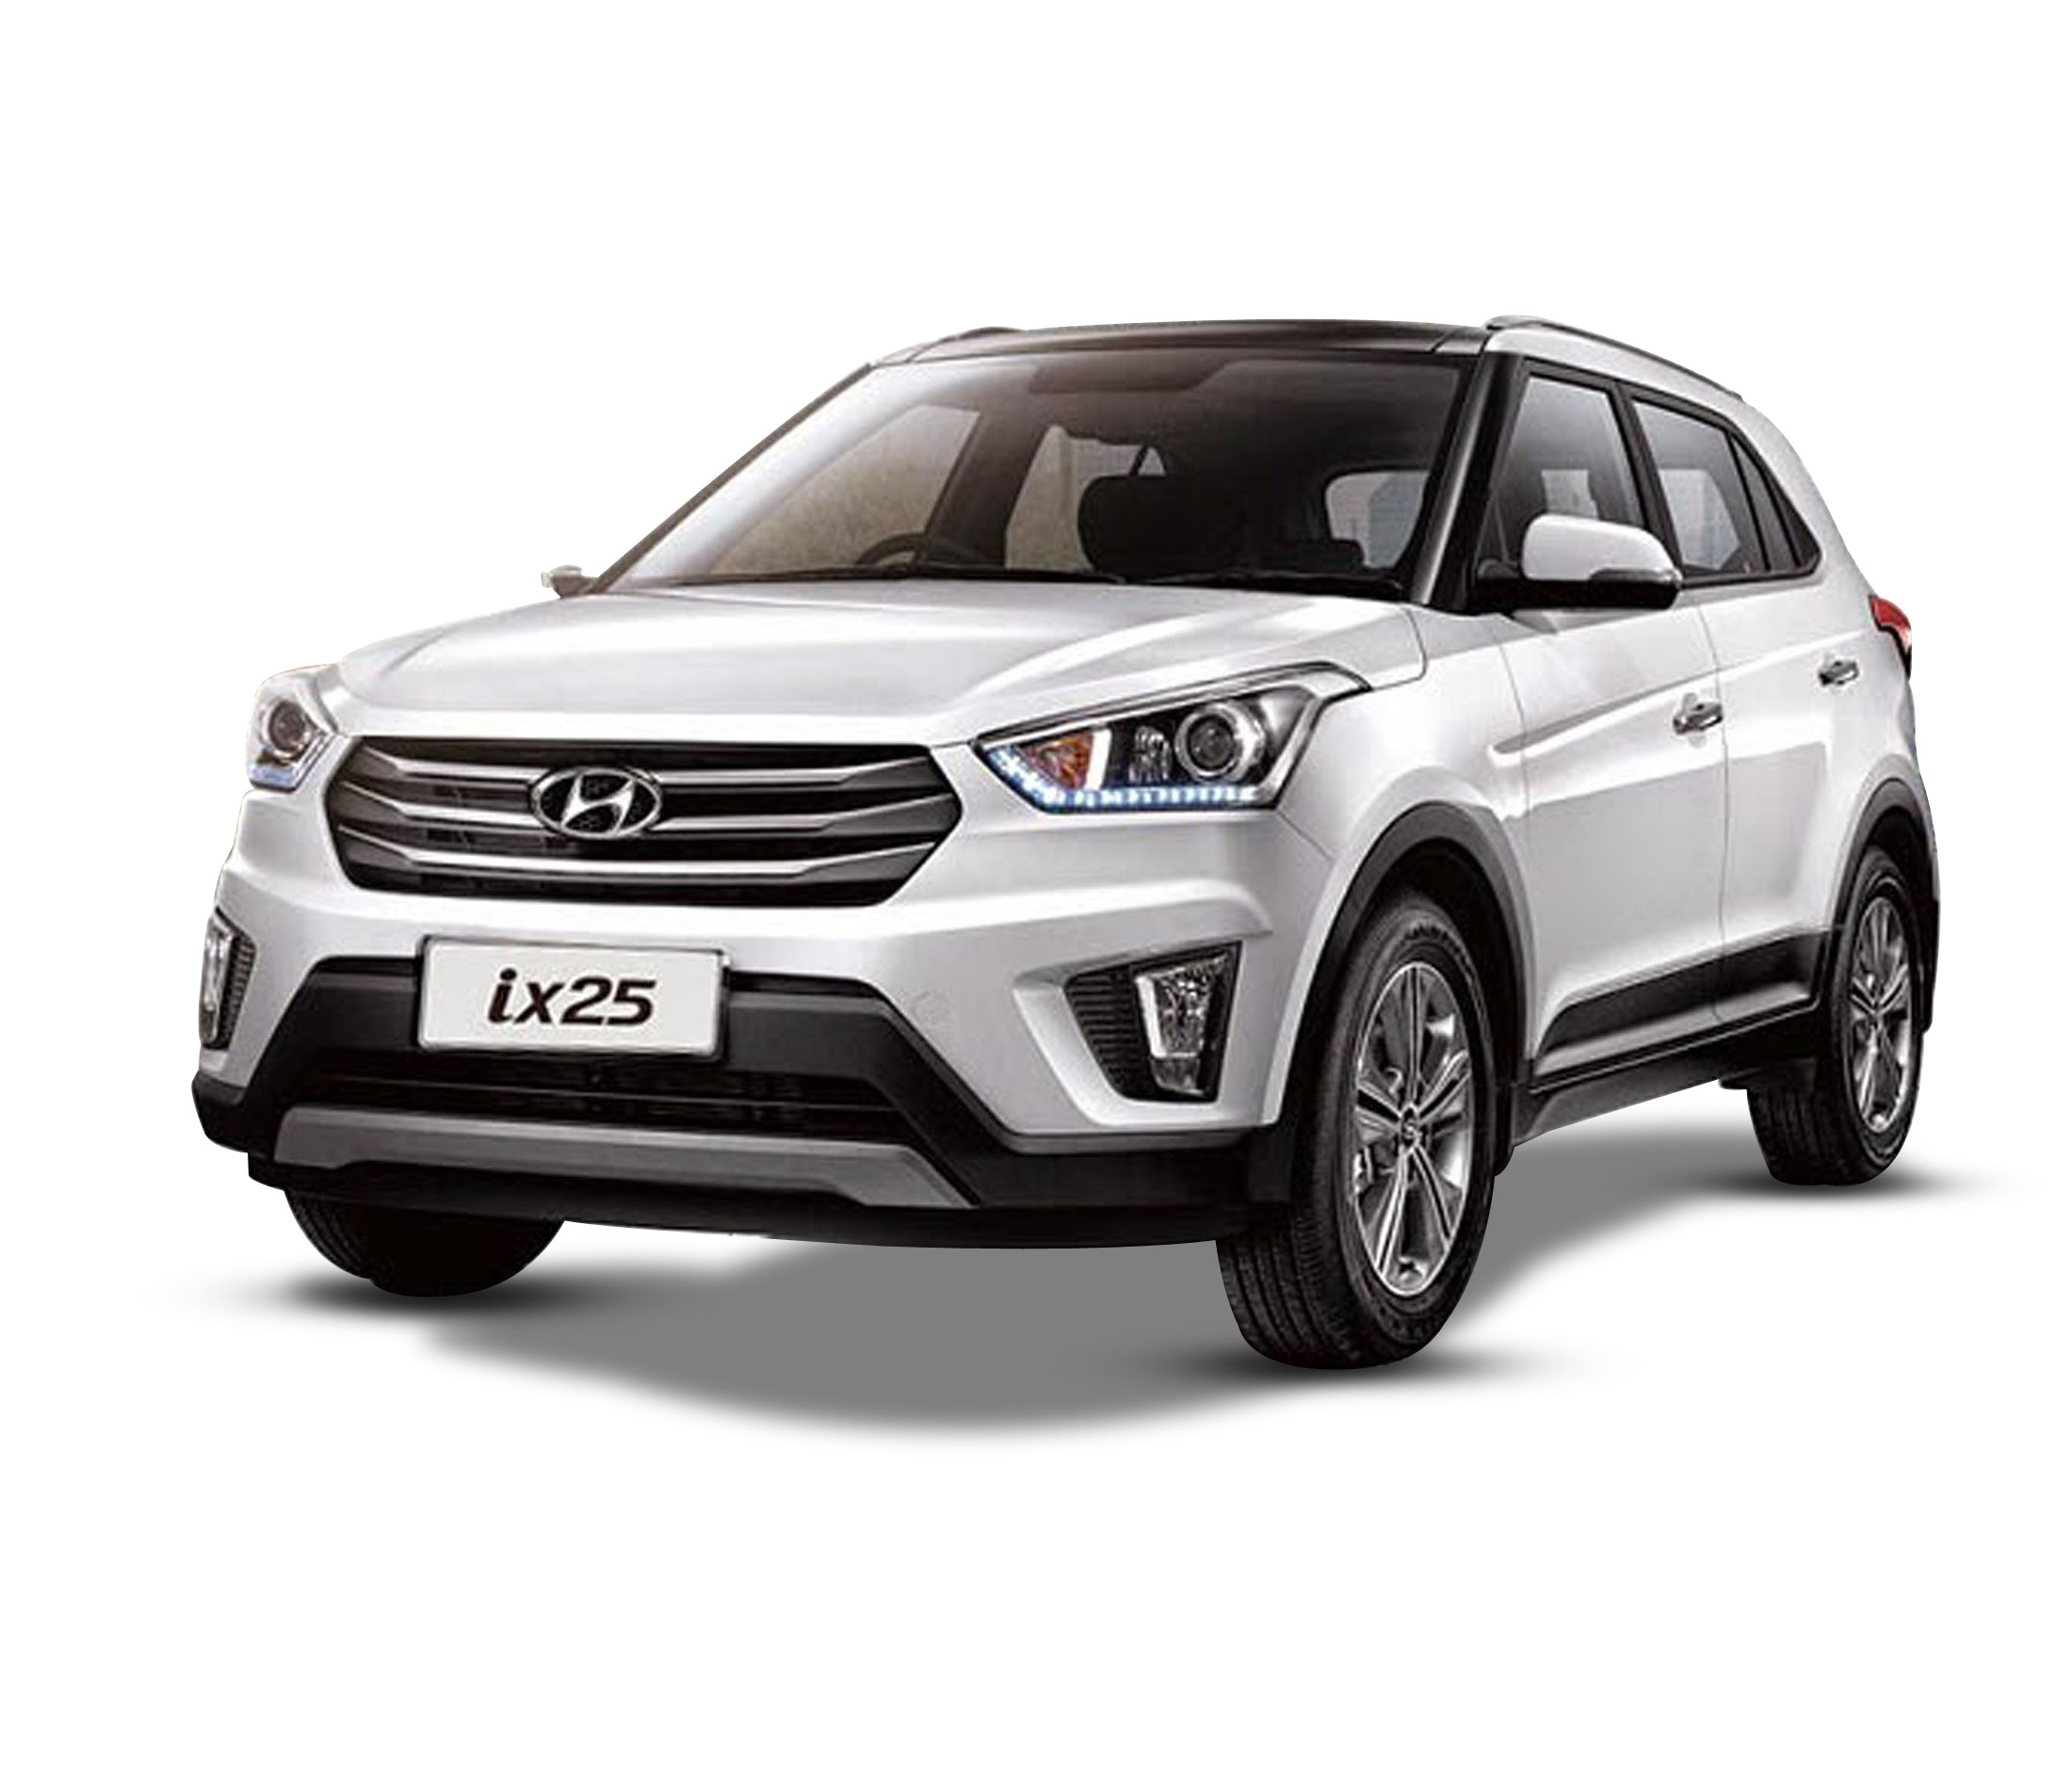 Hyundai to name compact SUV ‘Creta’